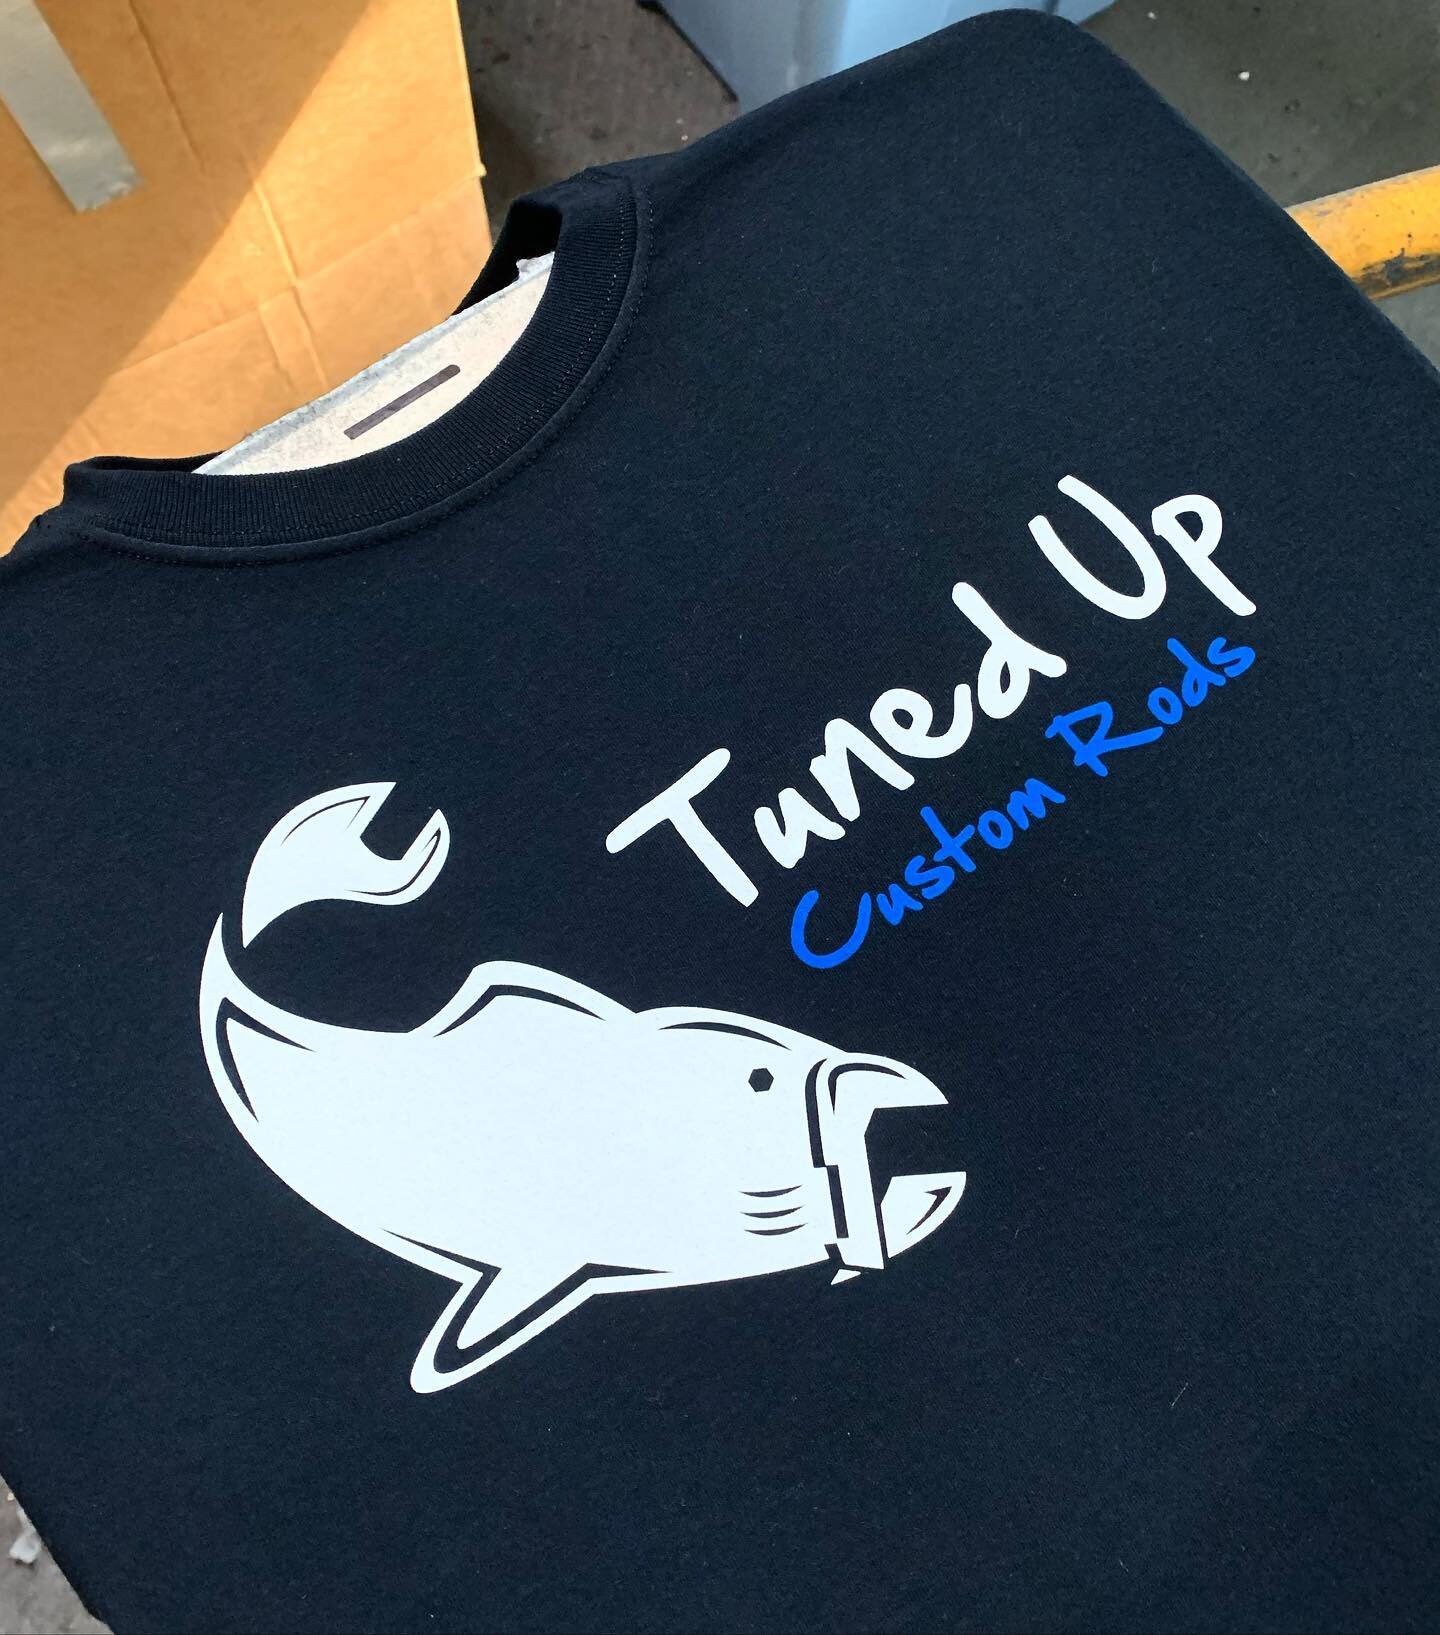 Fresh OG logo shirts for @tunedupcustomrods 
Anybody else fishing this wkend?
.
.
.
.
#tunedupcustomrods #tucr #fishing #mnfishing #screenprinting #screenprint #merch #jensoncreative #p666rty